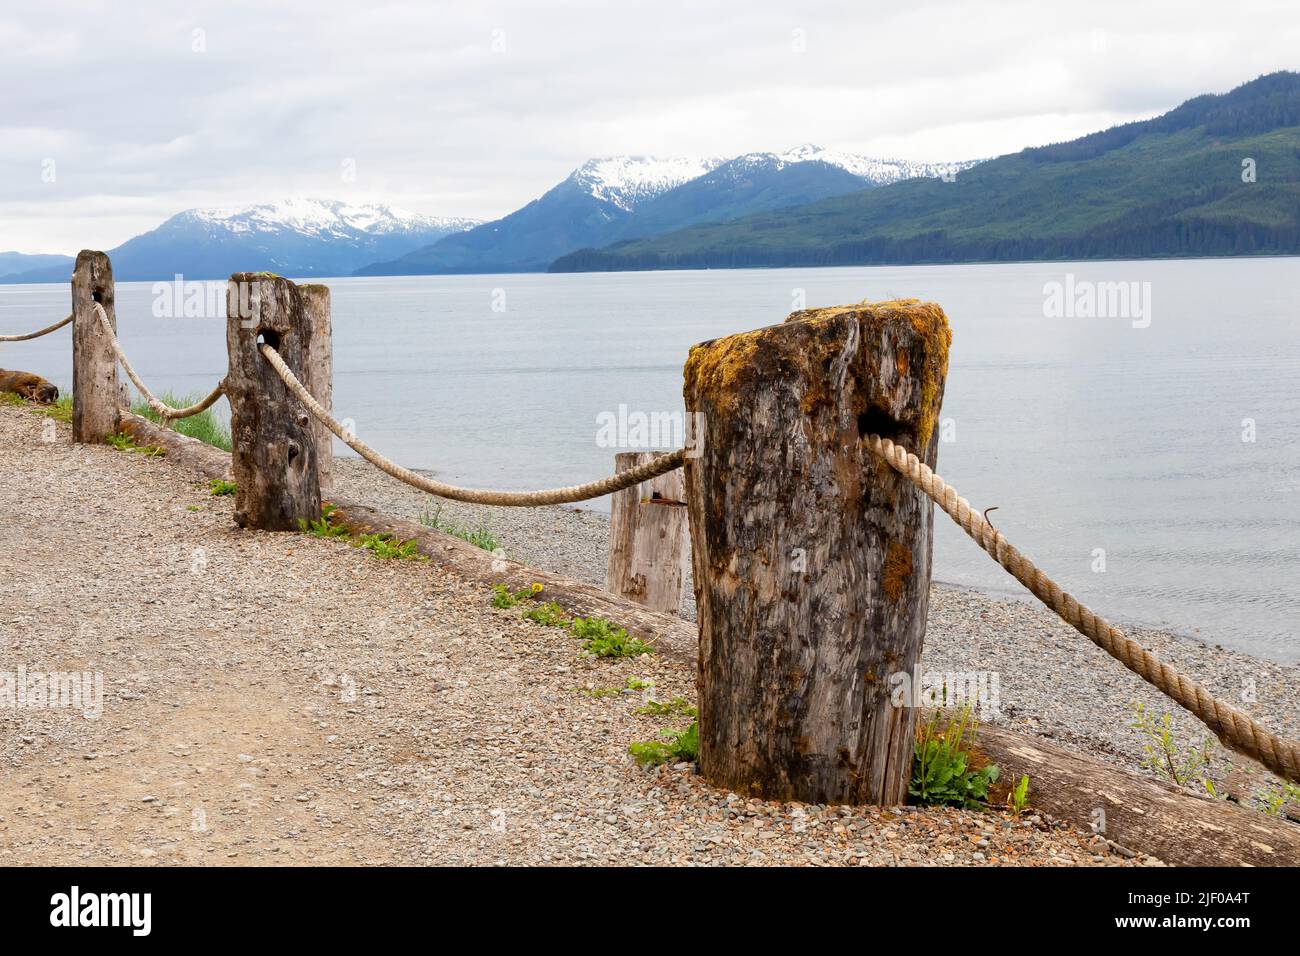 Walkway Icy Strait Point Hoonah Alaska United States of America. Stock Photo